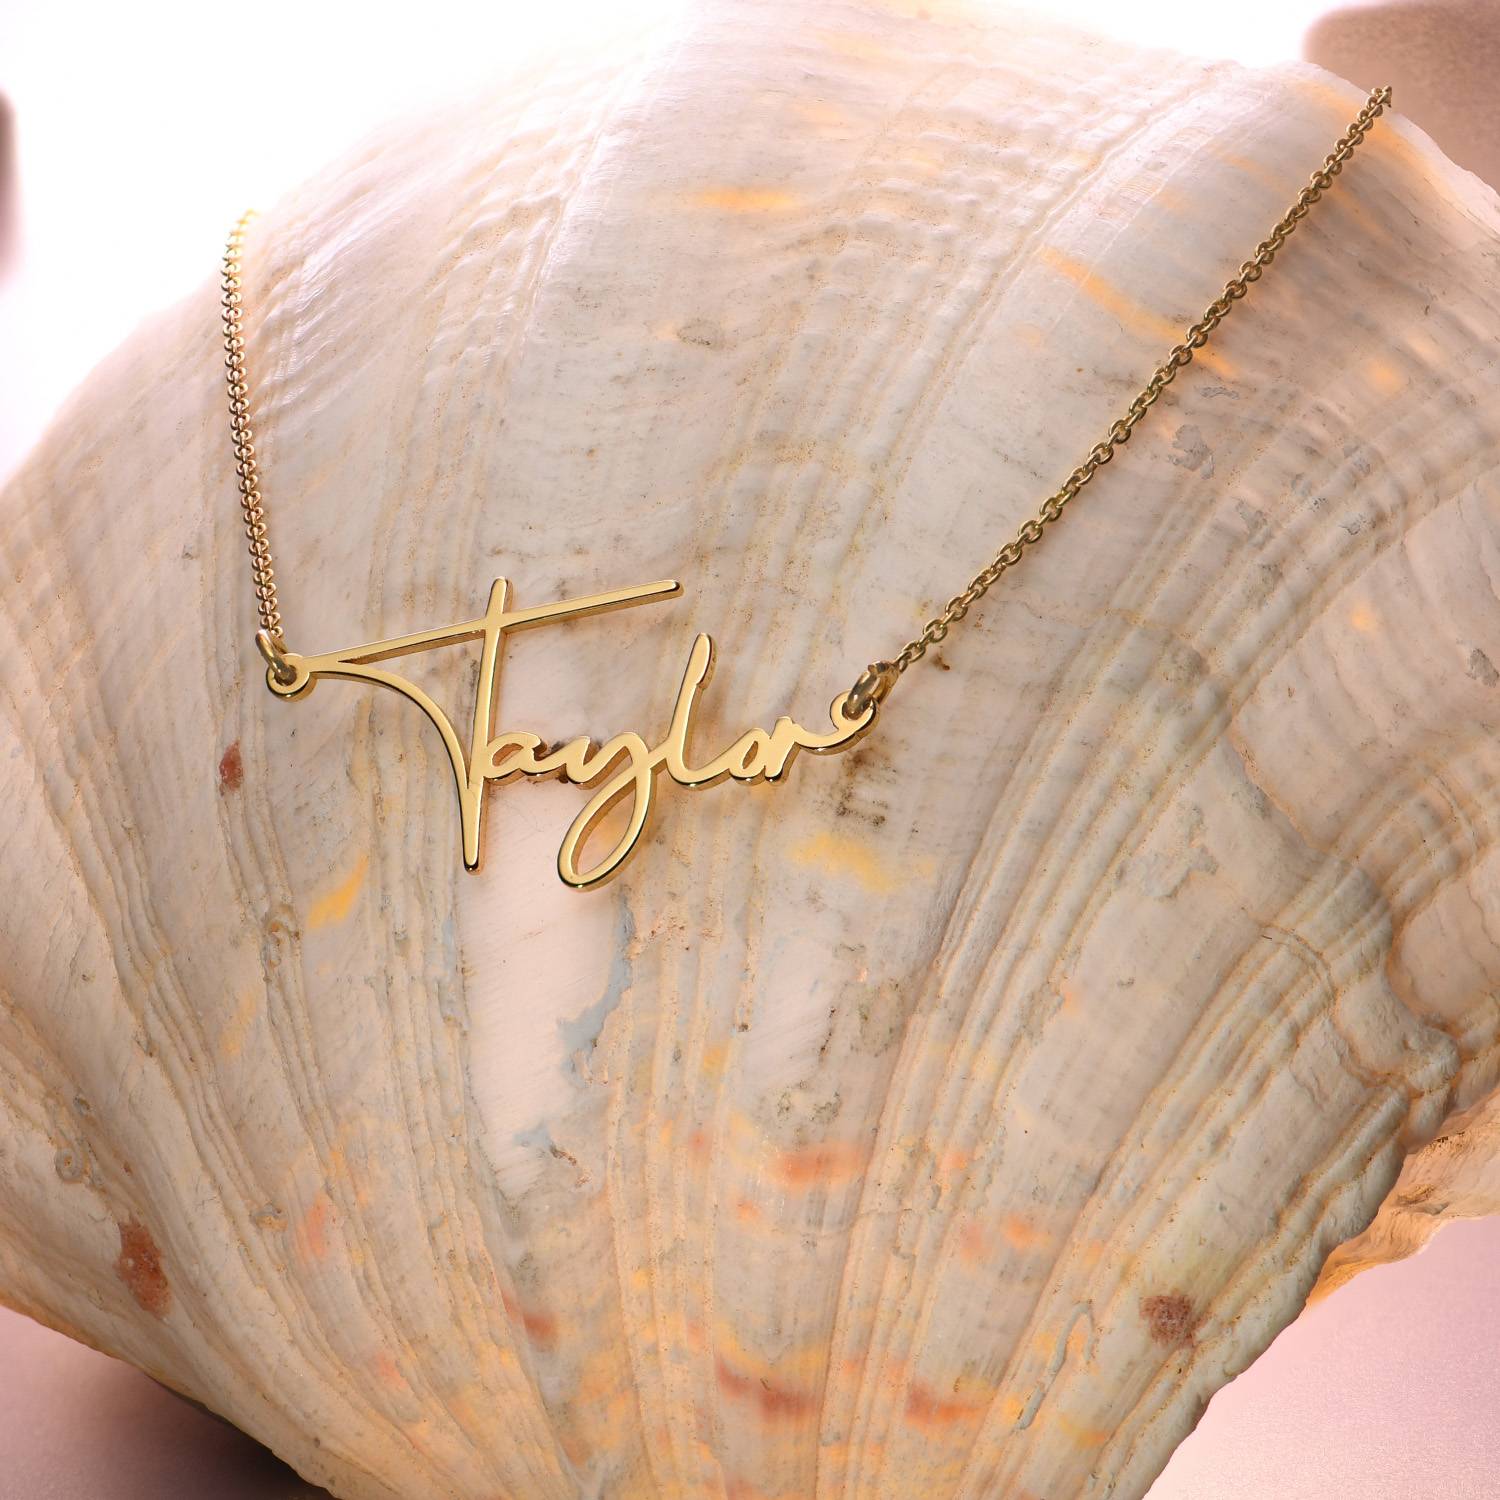 Paris Name Necklace in Gold Vermeil-5 product photo